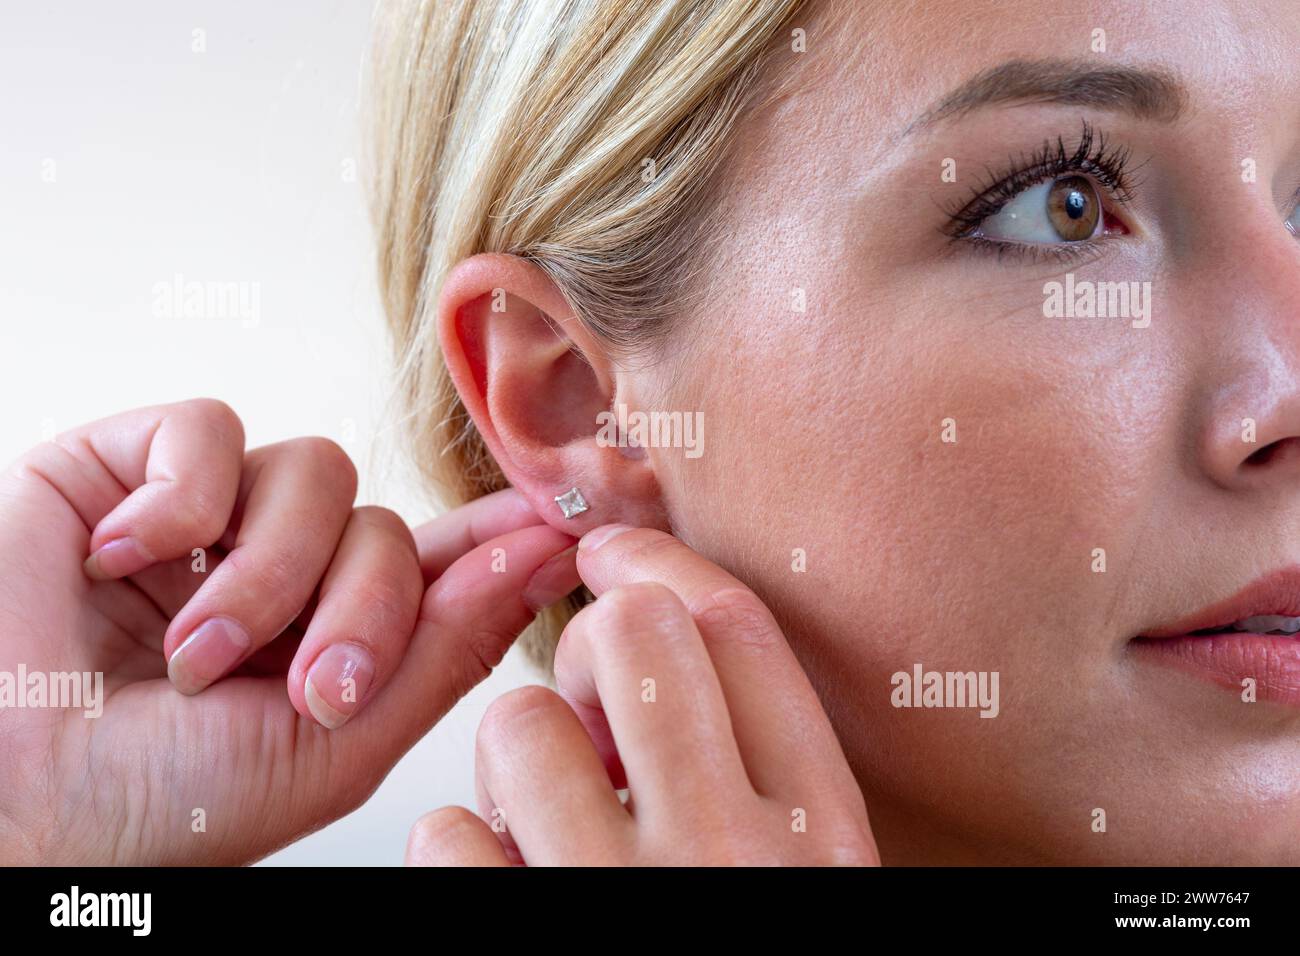 Woman hanging an earring. Stock Photo